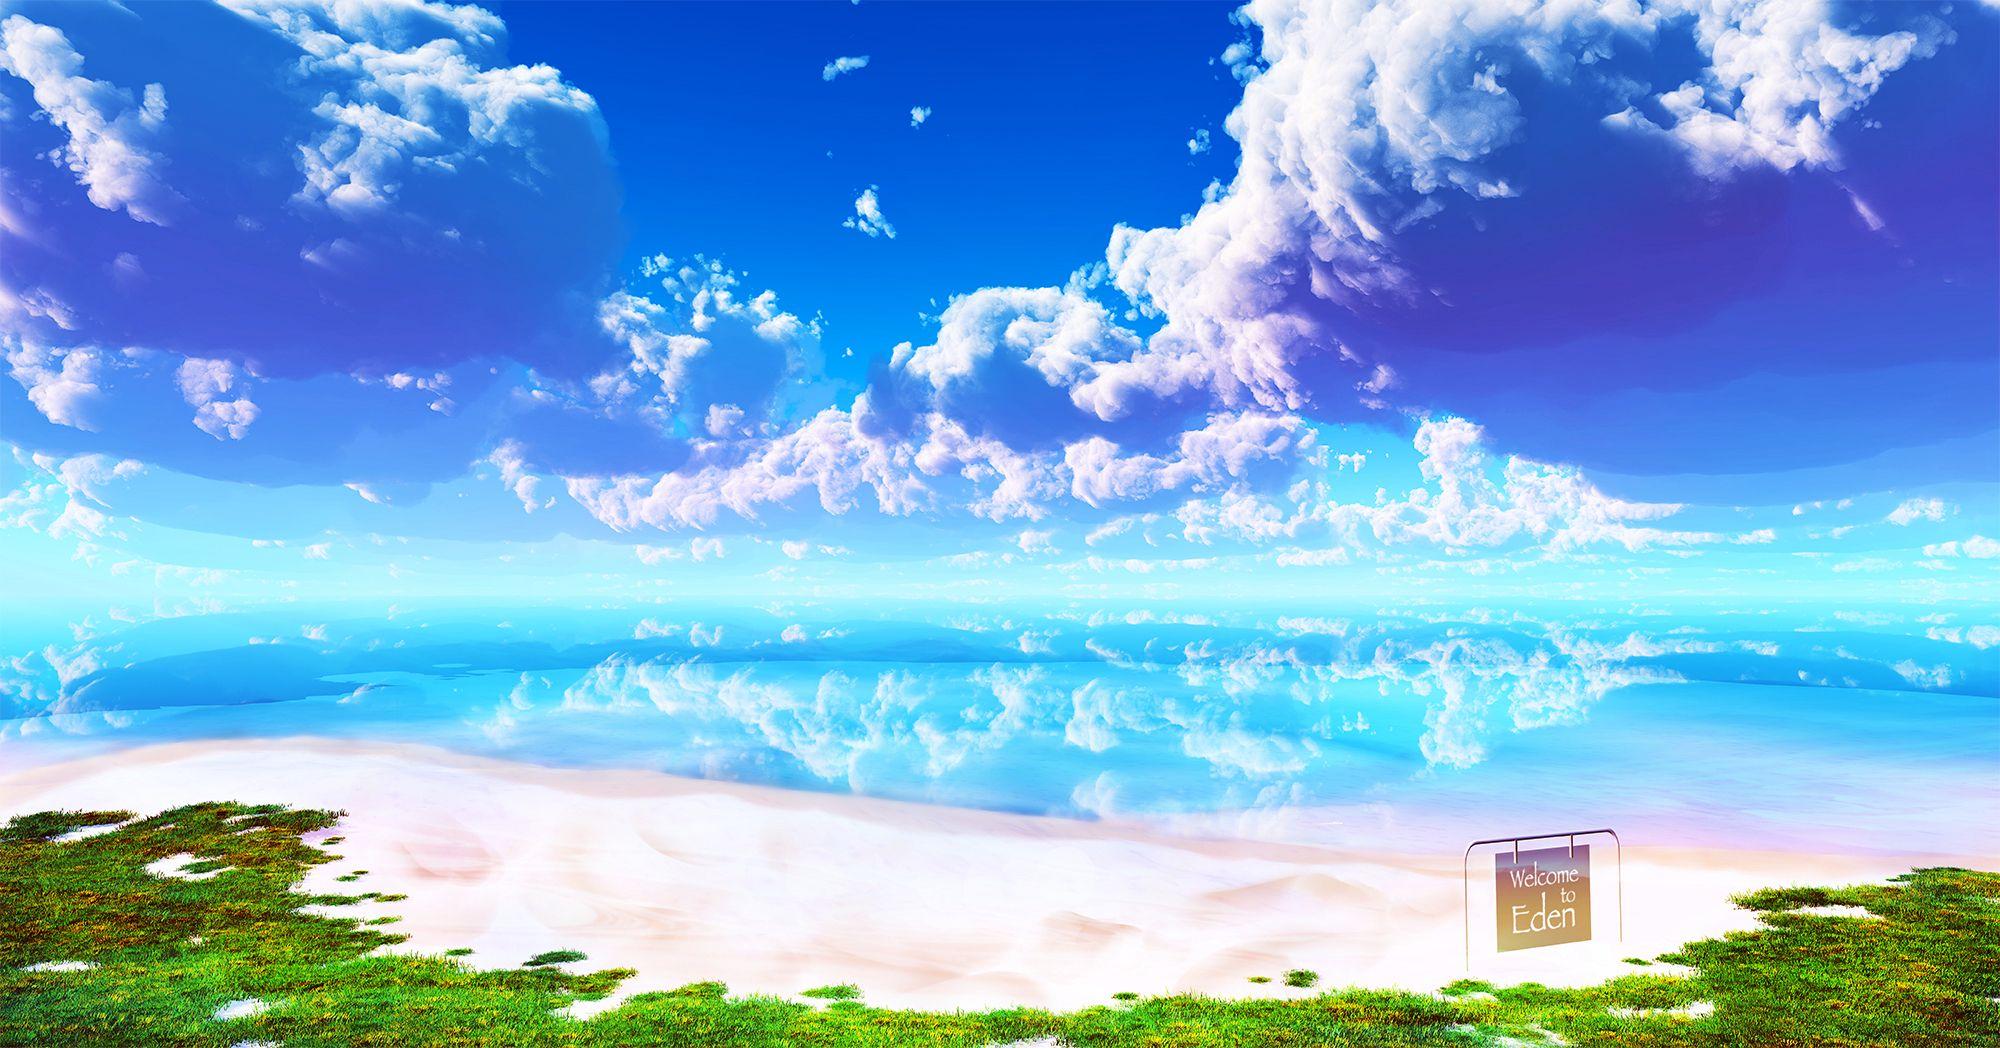 Anime Beach Scenery Wallpapers - Top Free Anime Beach Scenery ...